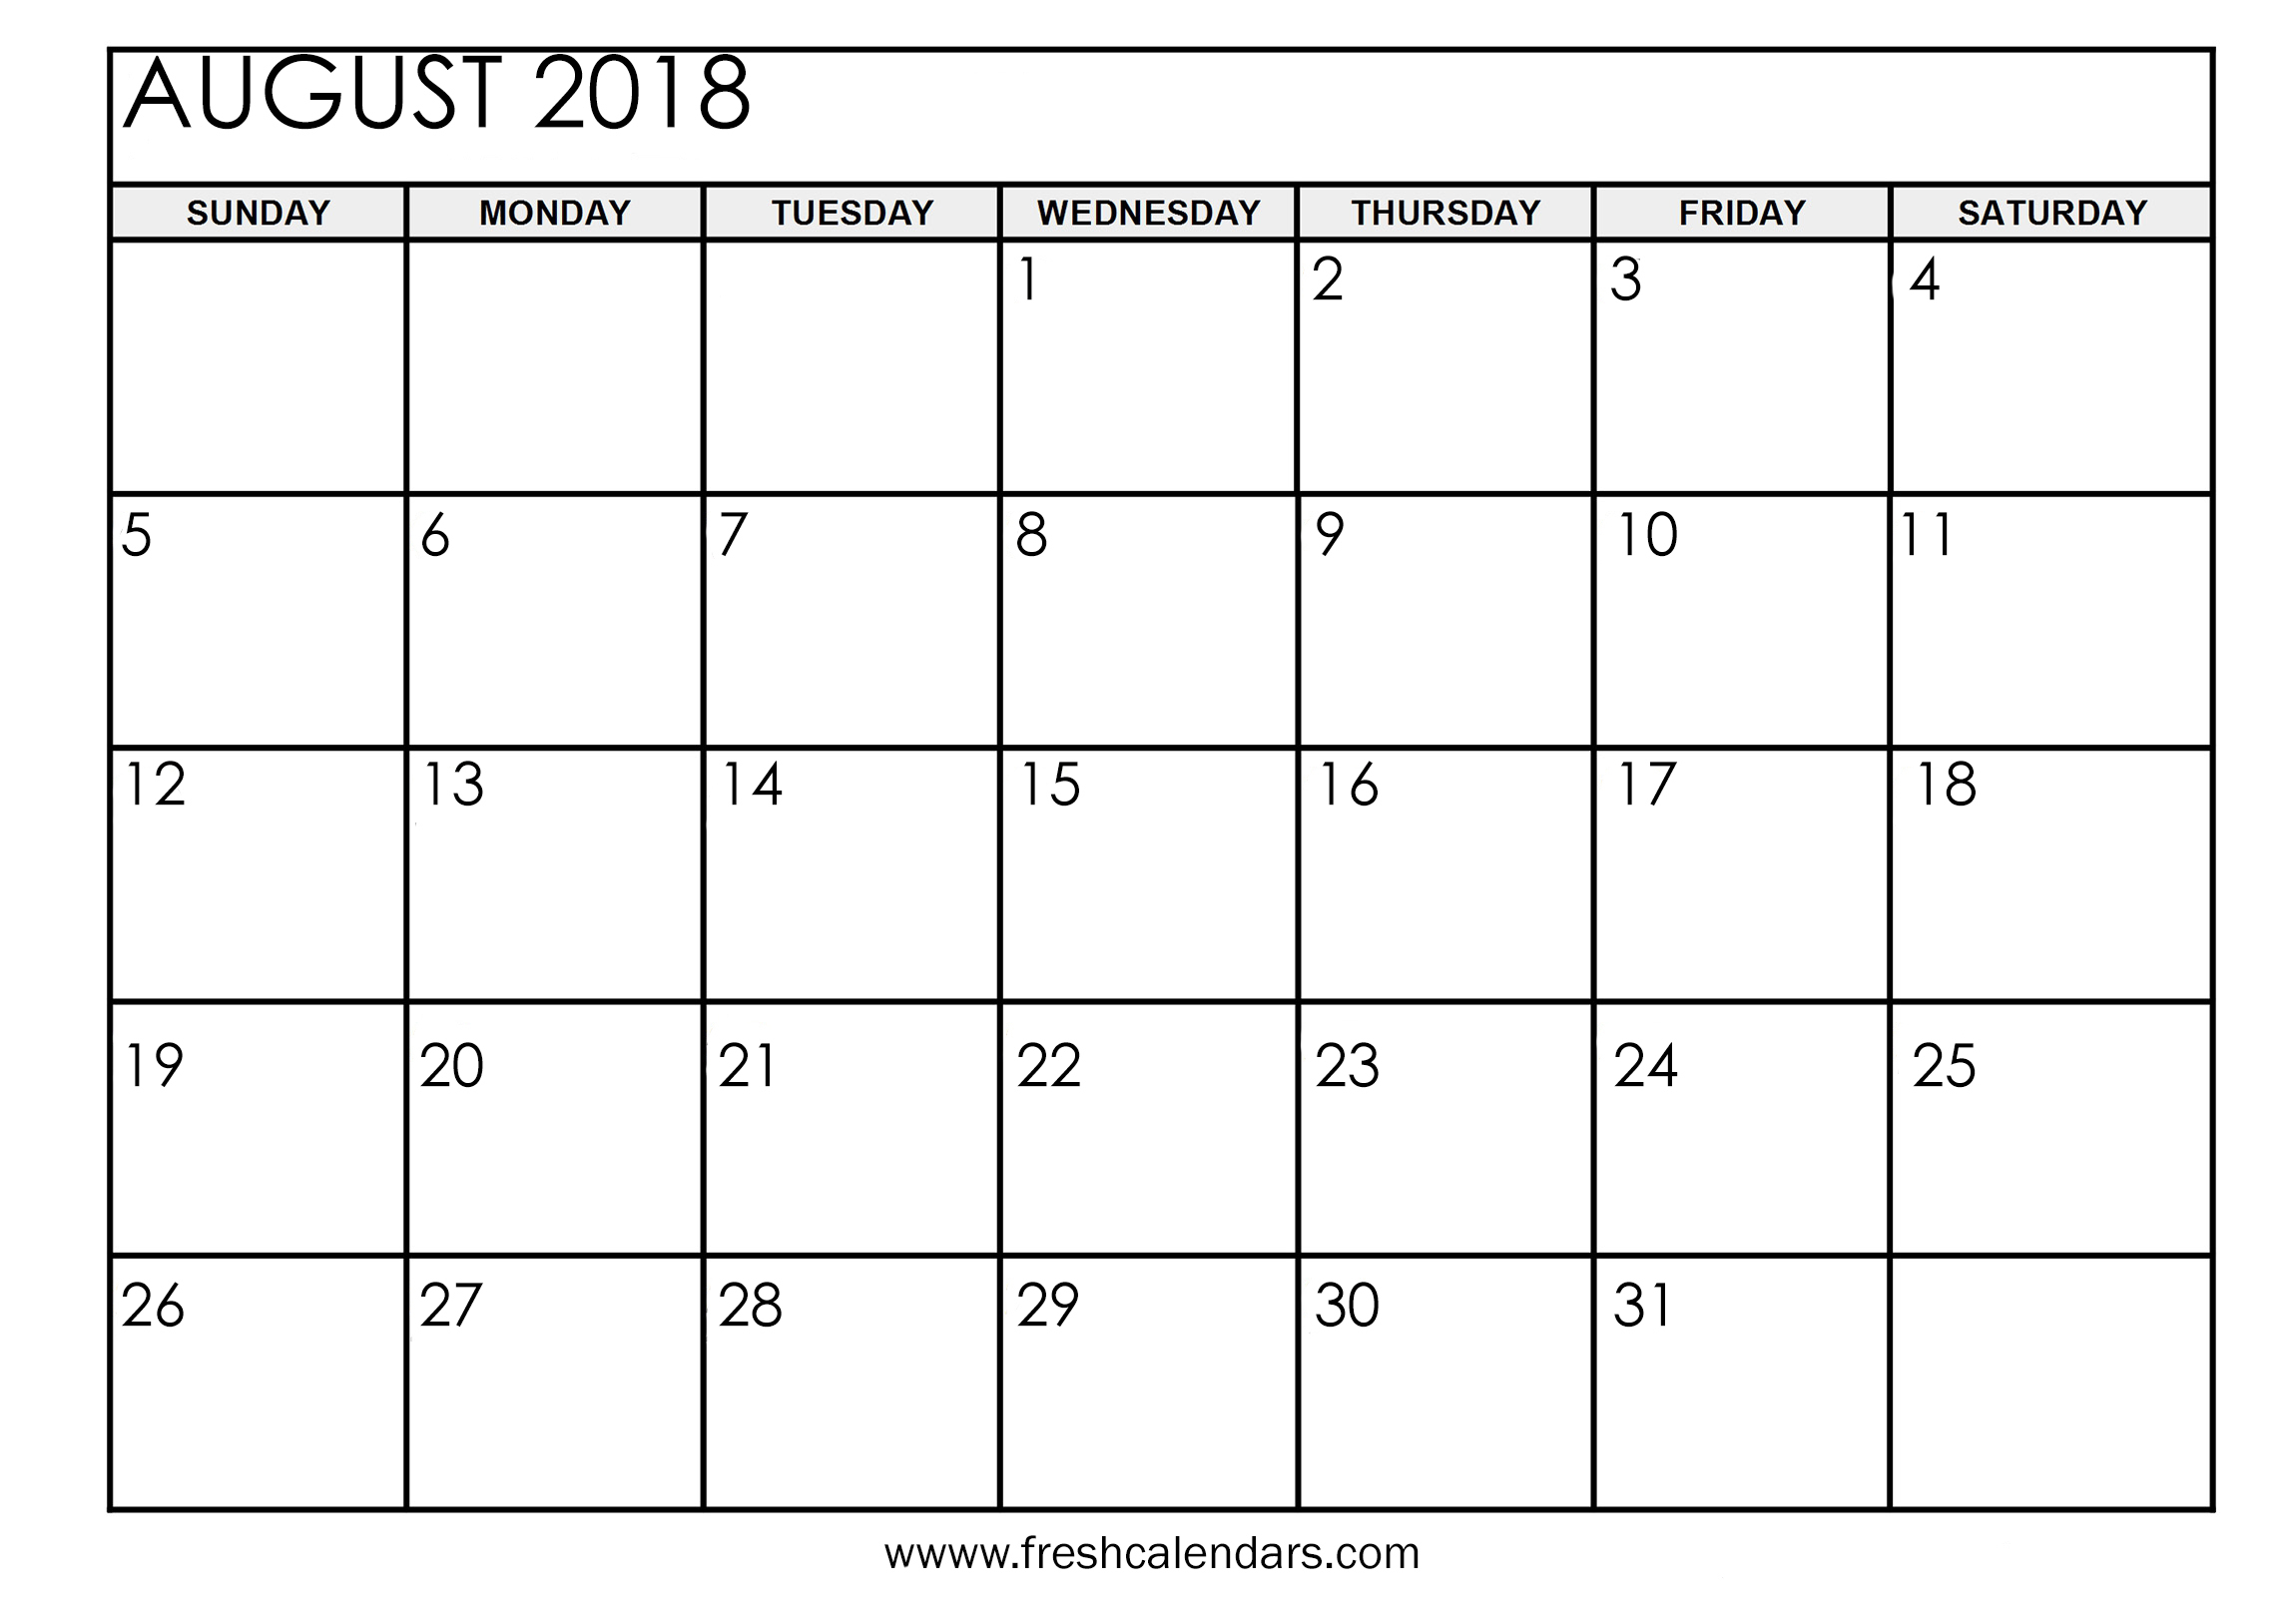 August 2018 Calendar Printable - Fresh Calendars